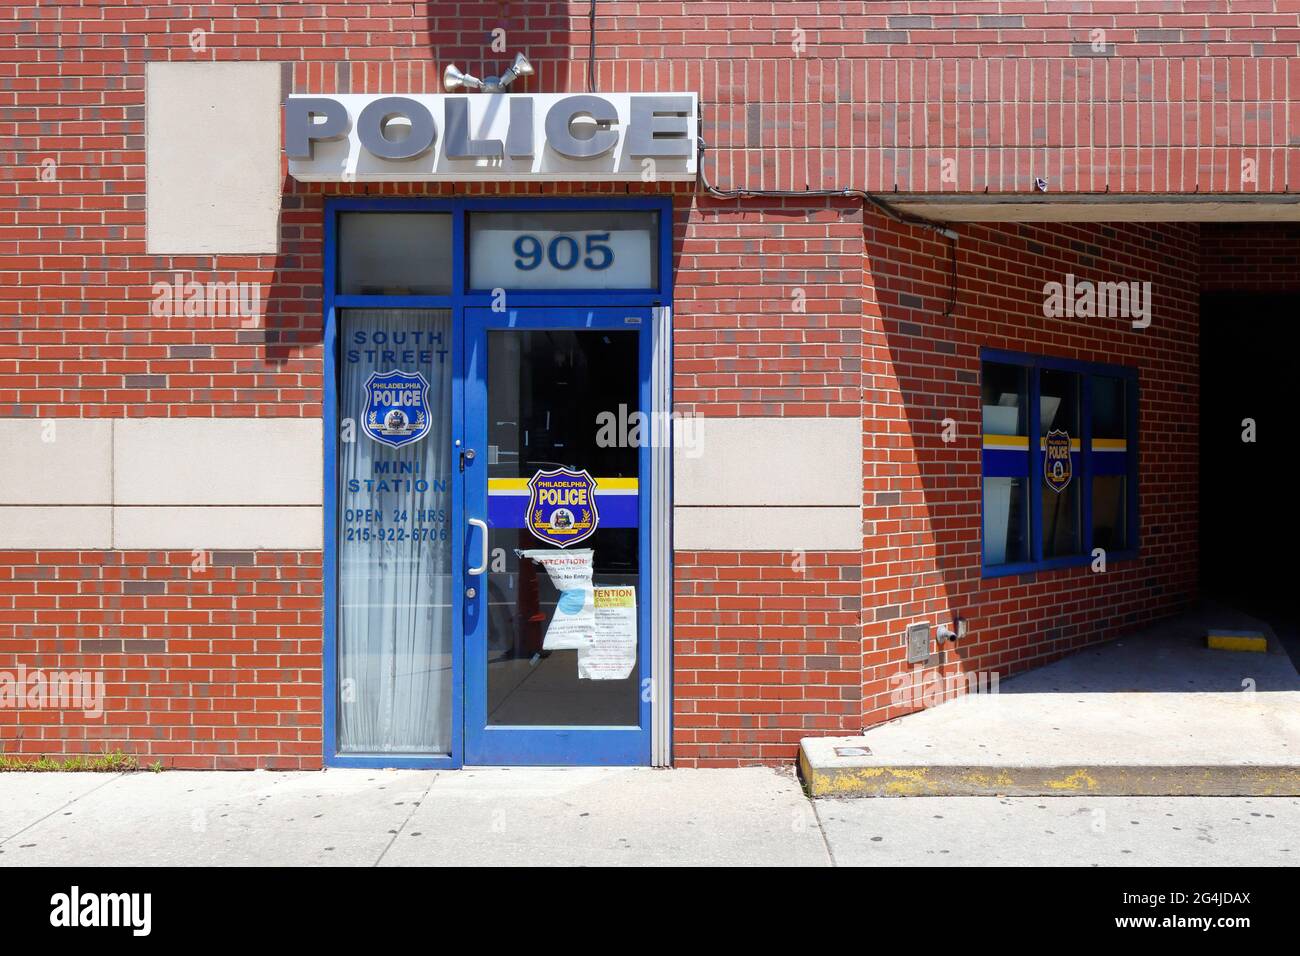 Philadelphia Police - South Street Mini Station, 905 South St, Philadelphia, PA. Außenfassade einer Polizeiunterstation. Stockfoto